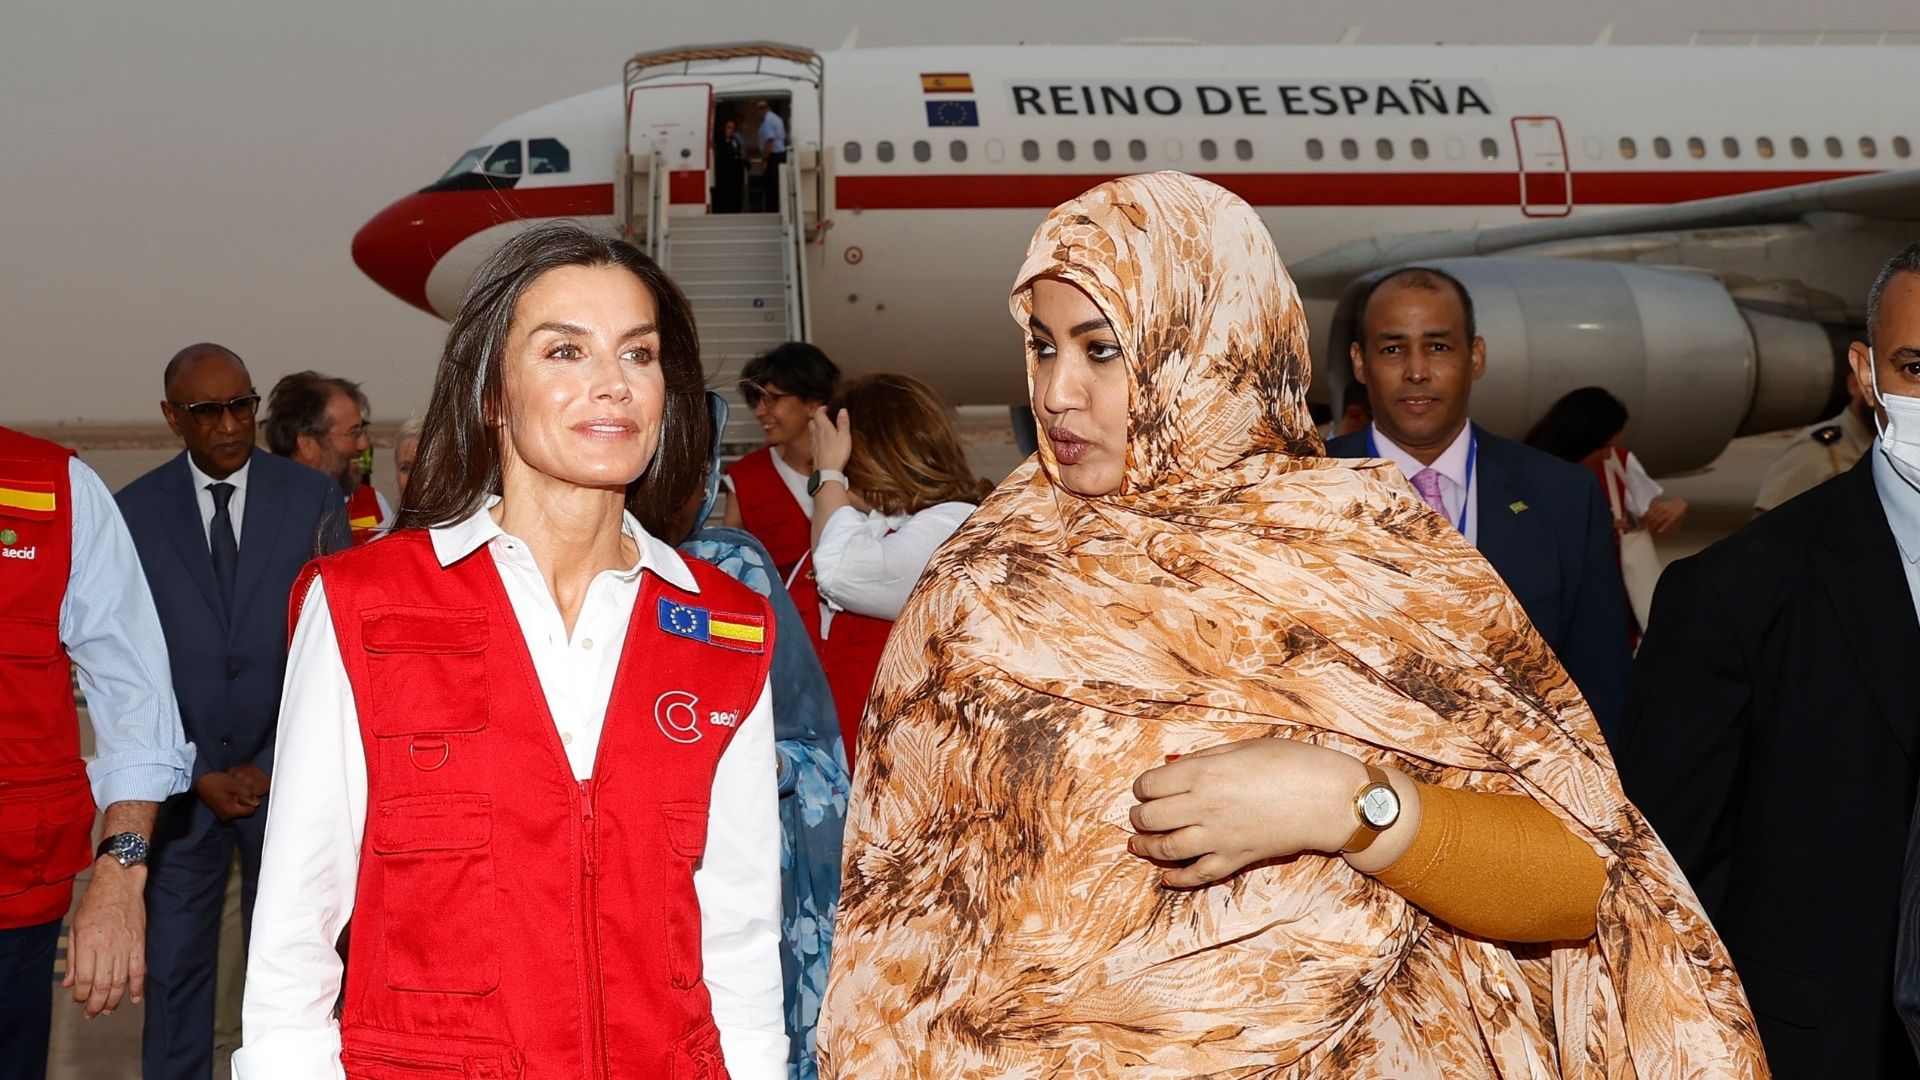 La Reina Letizia se viste de uniforme (chaleco de cooperante) en su viaje a Mauritania